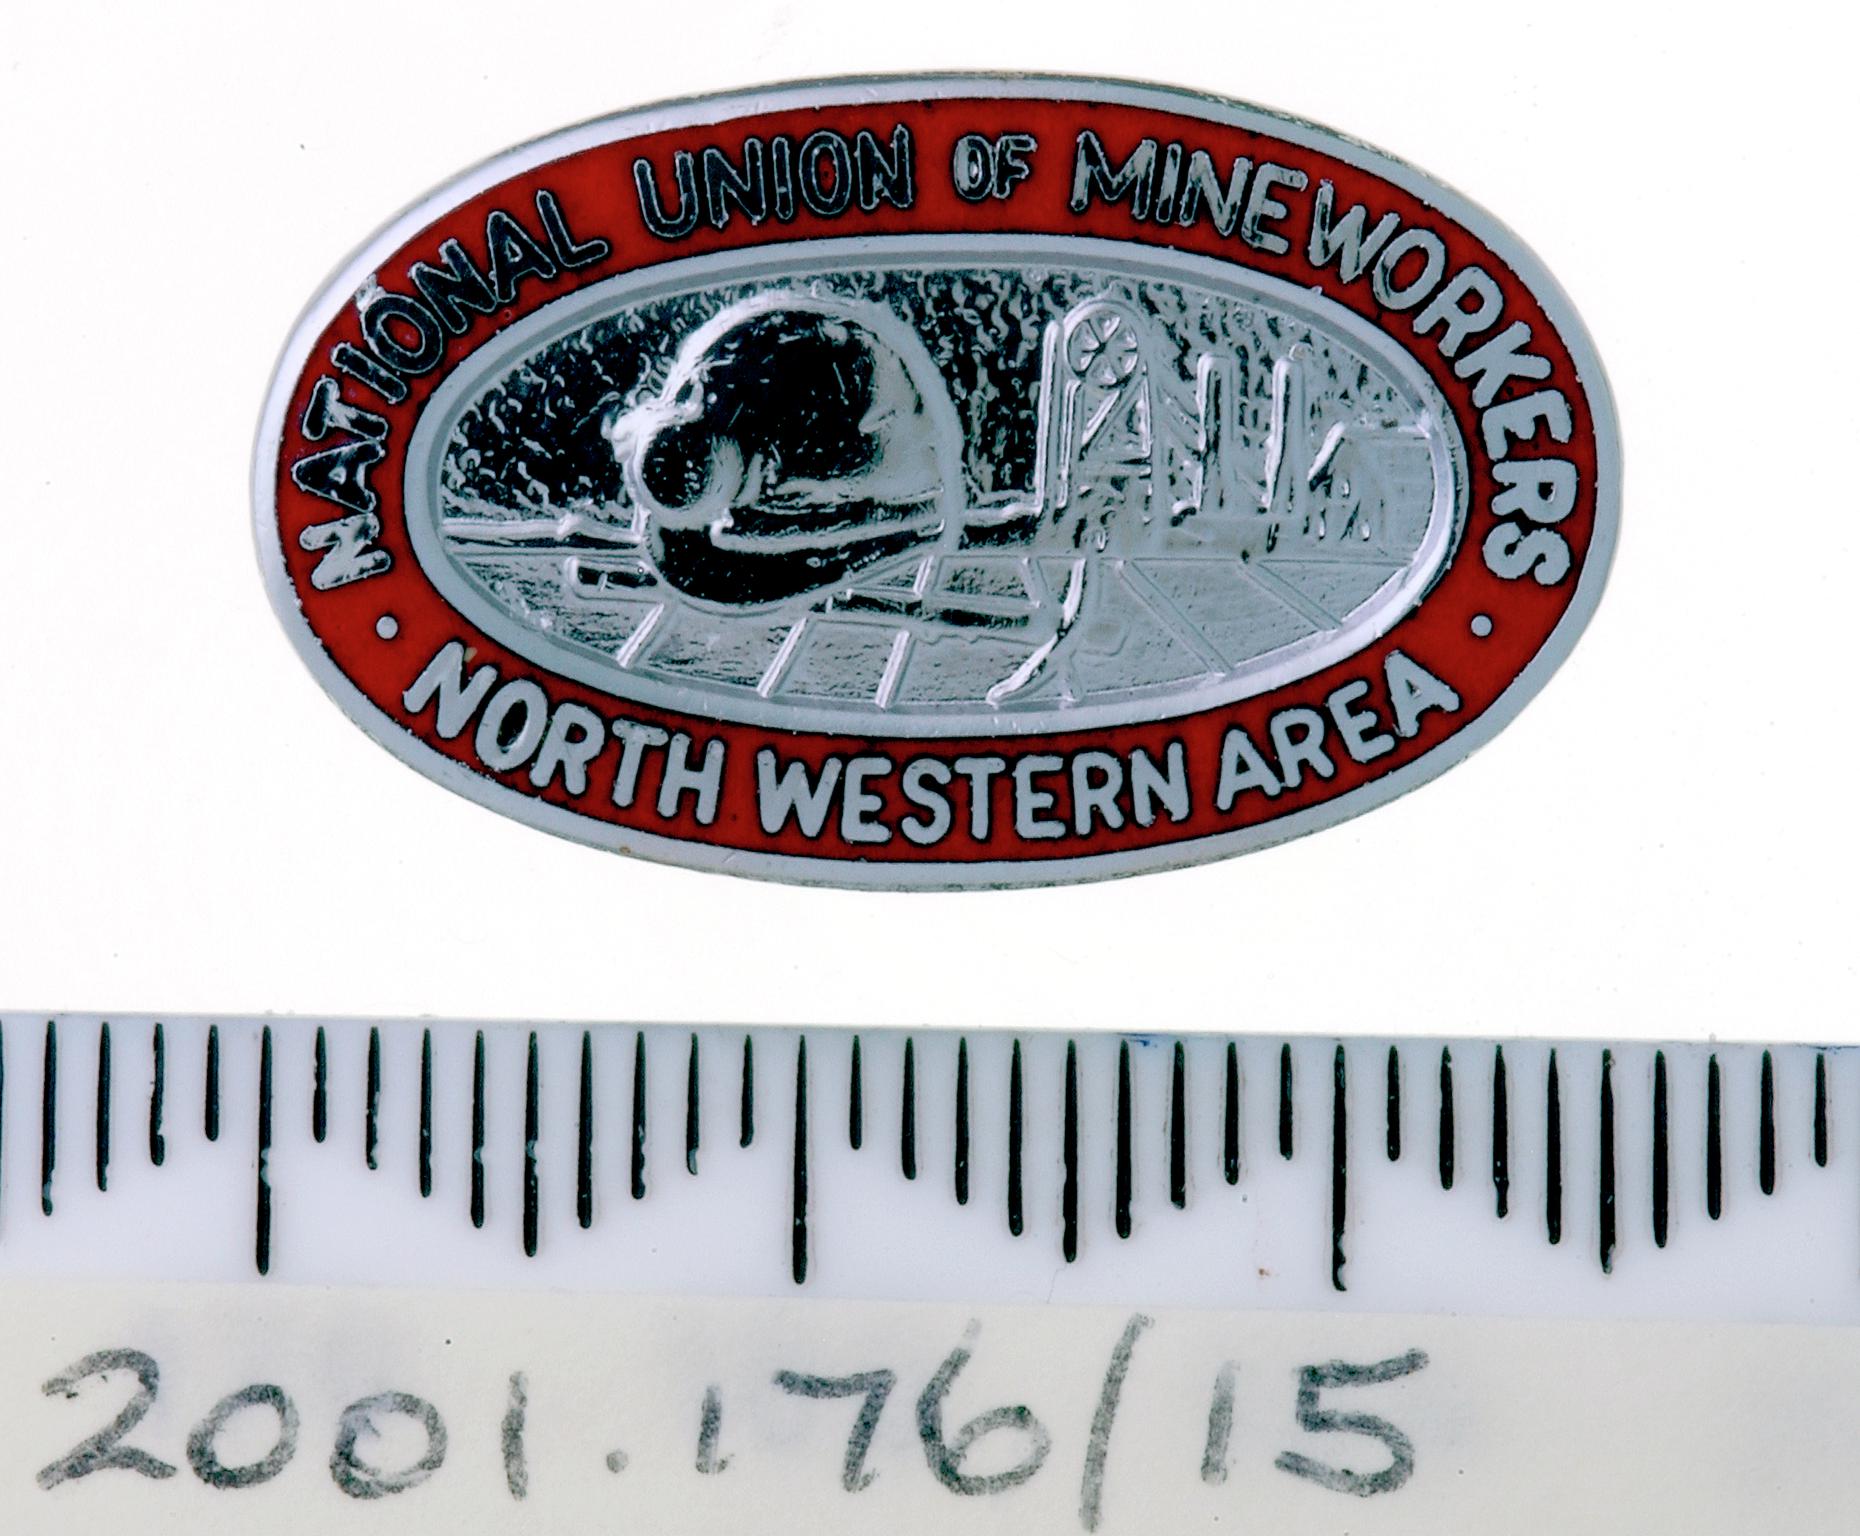 N.U.M. North Western Area, badge